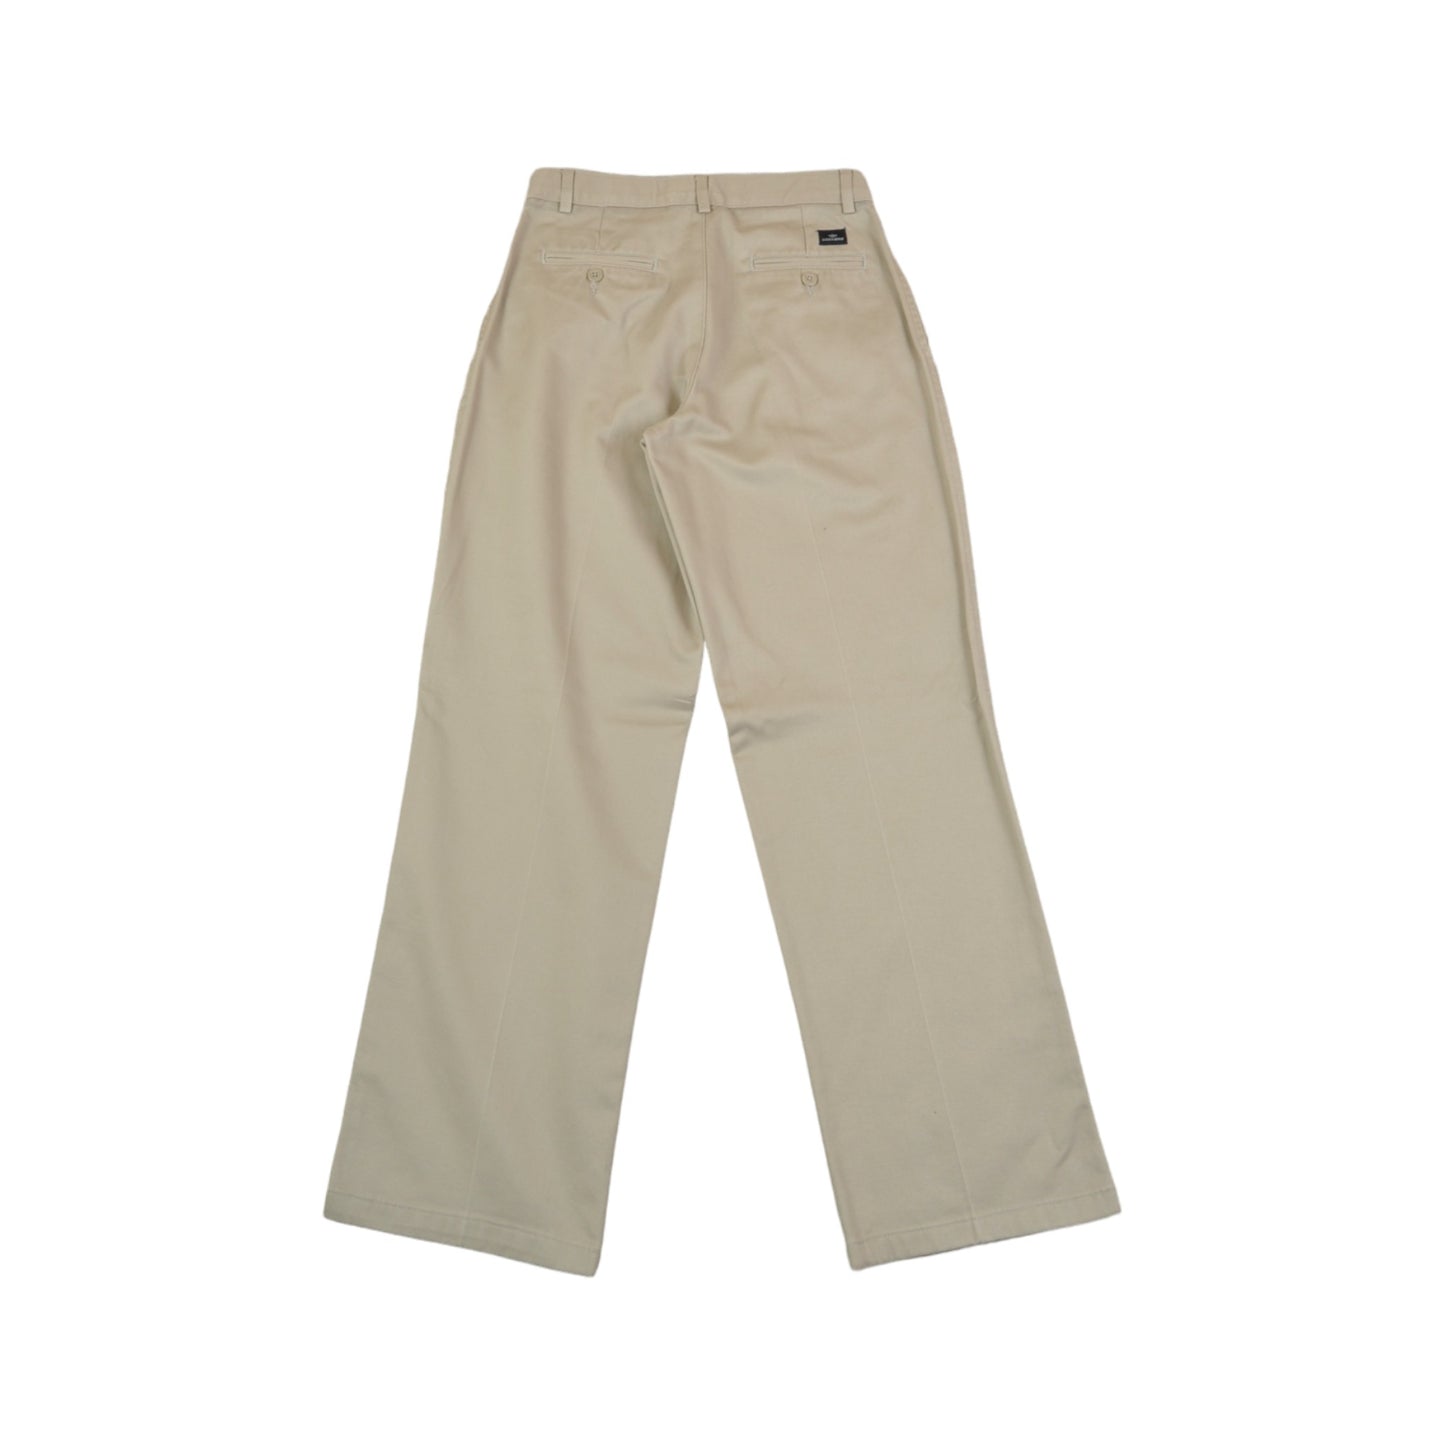 Vintage Dockers Chino Cotton Pants Beige Ladies W26 L28